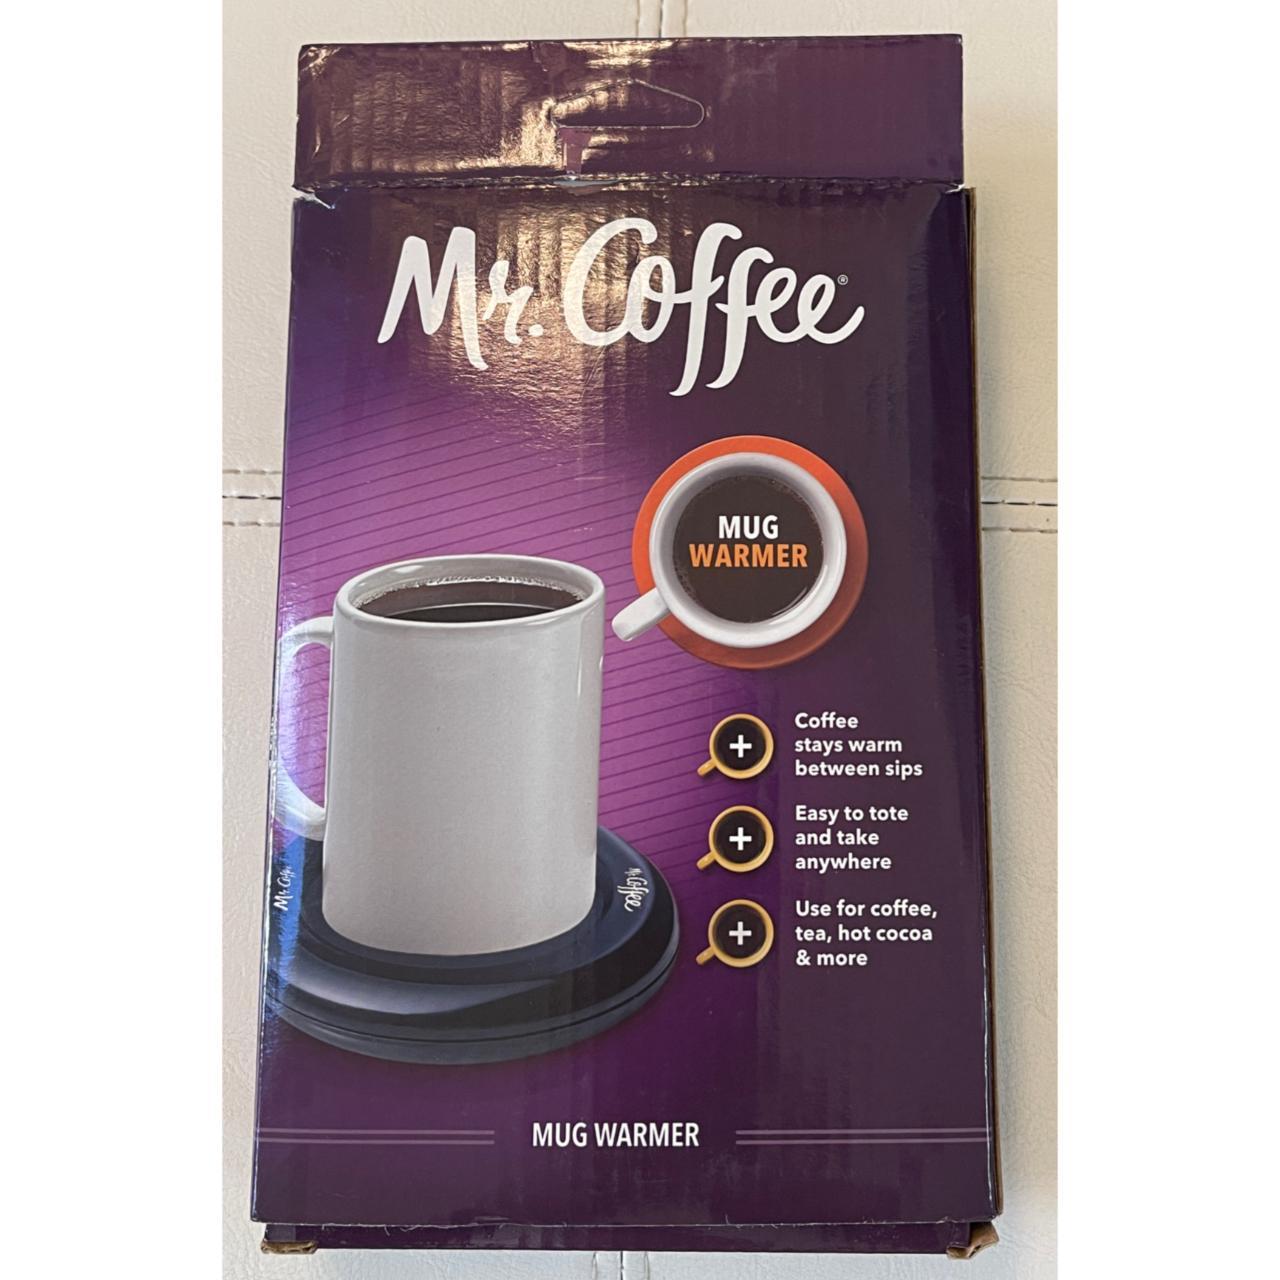 Mr. Coffee Mug Warmer Black